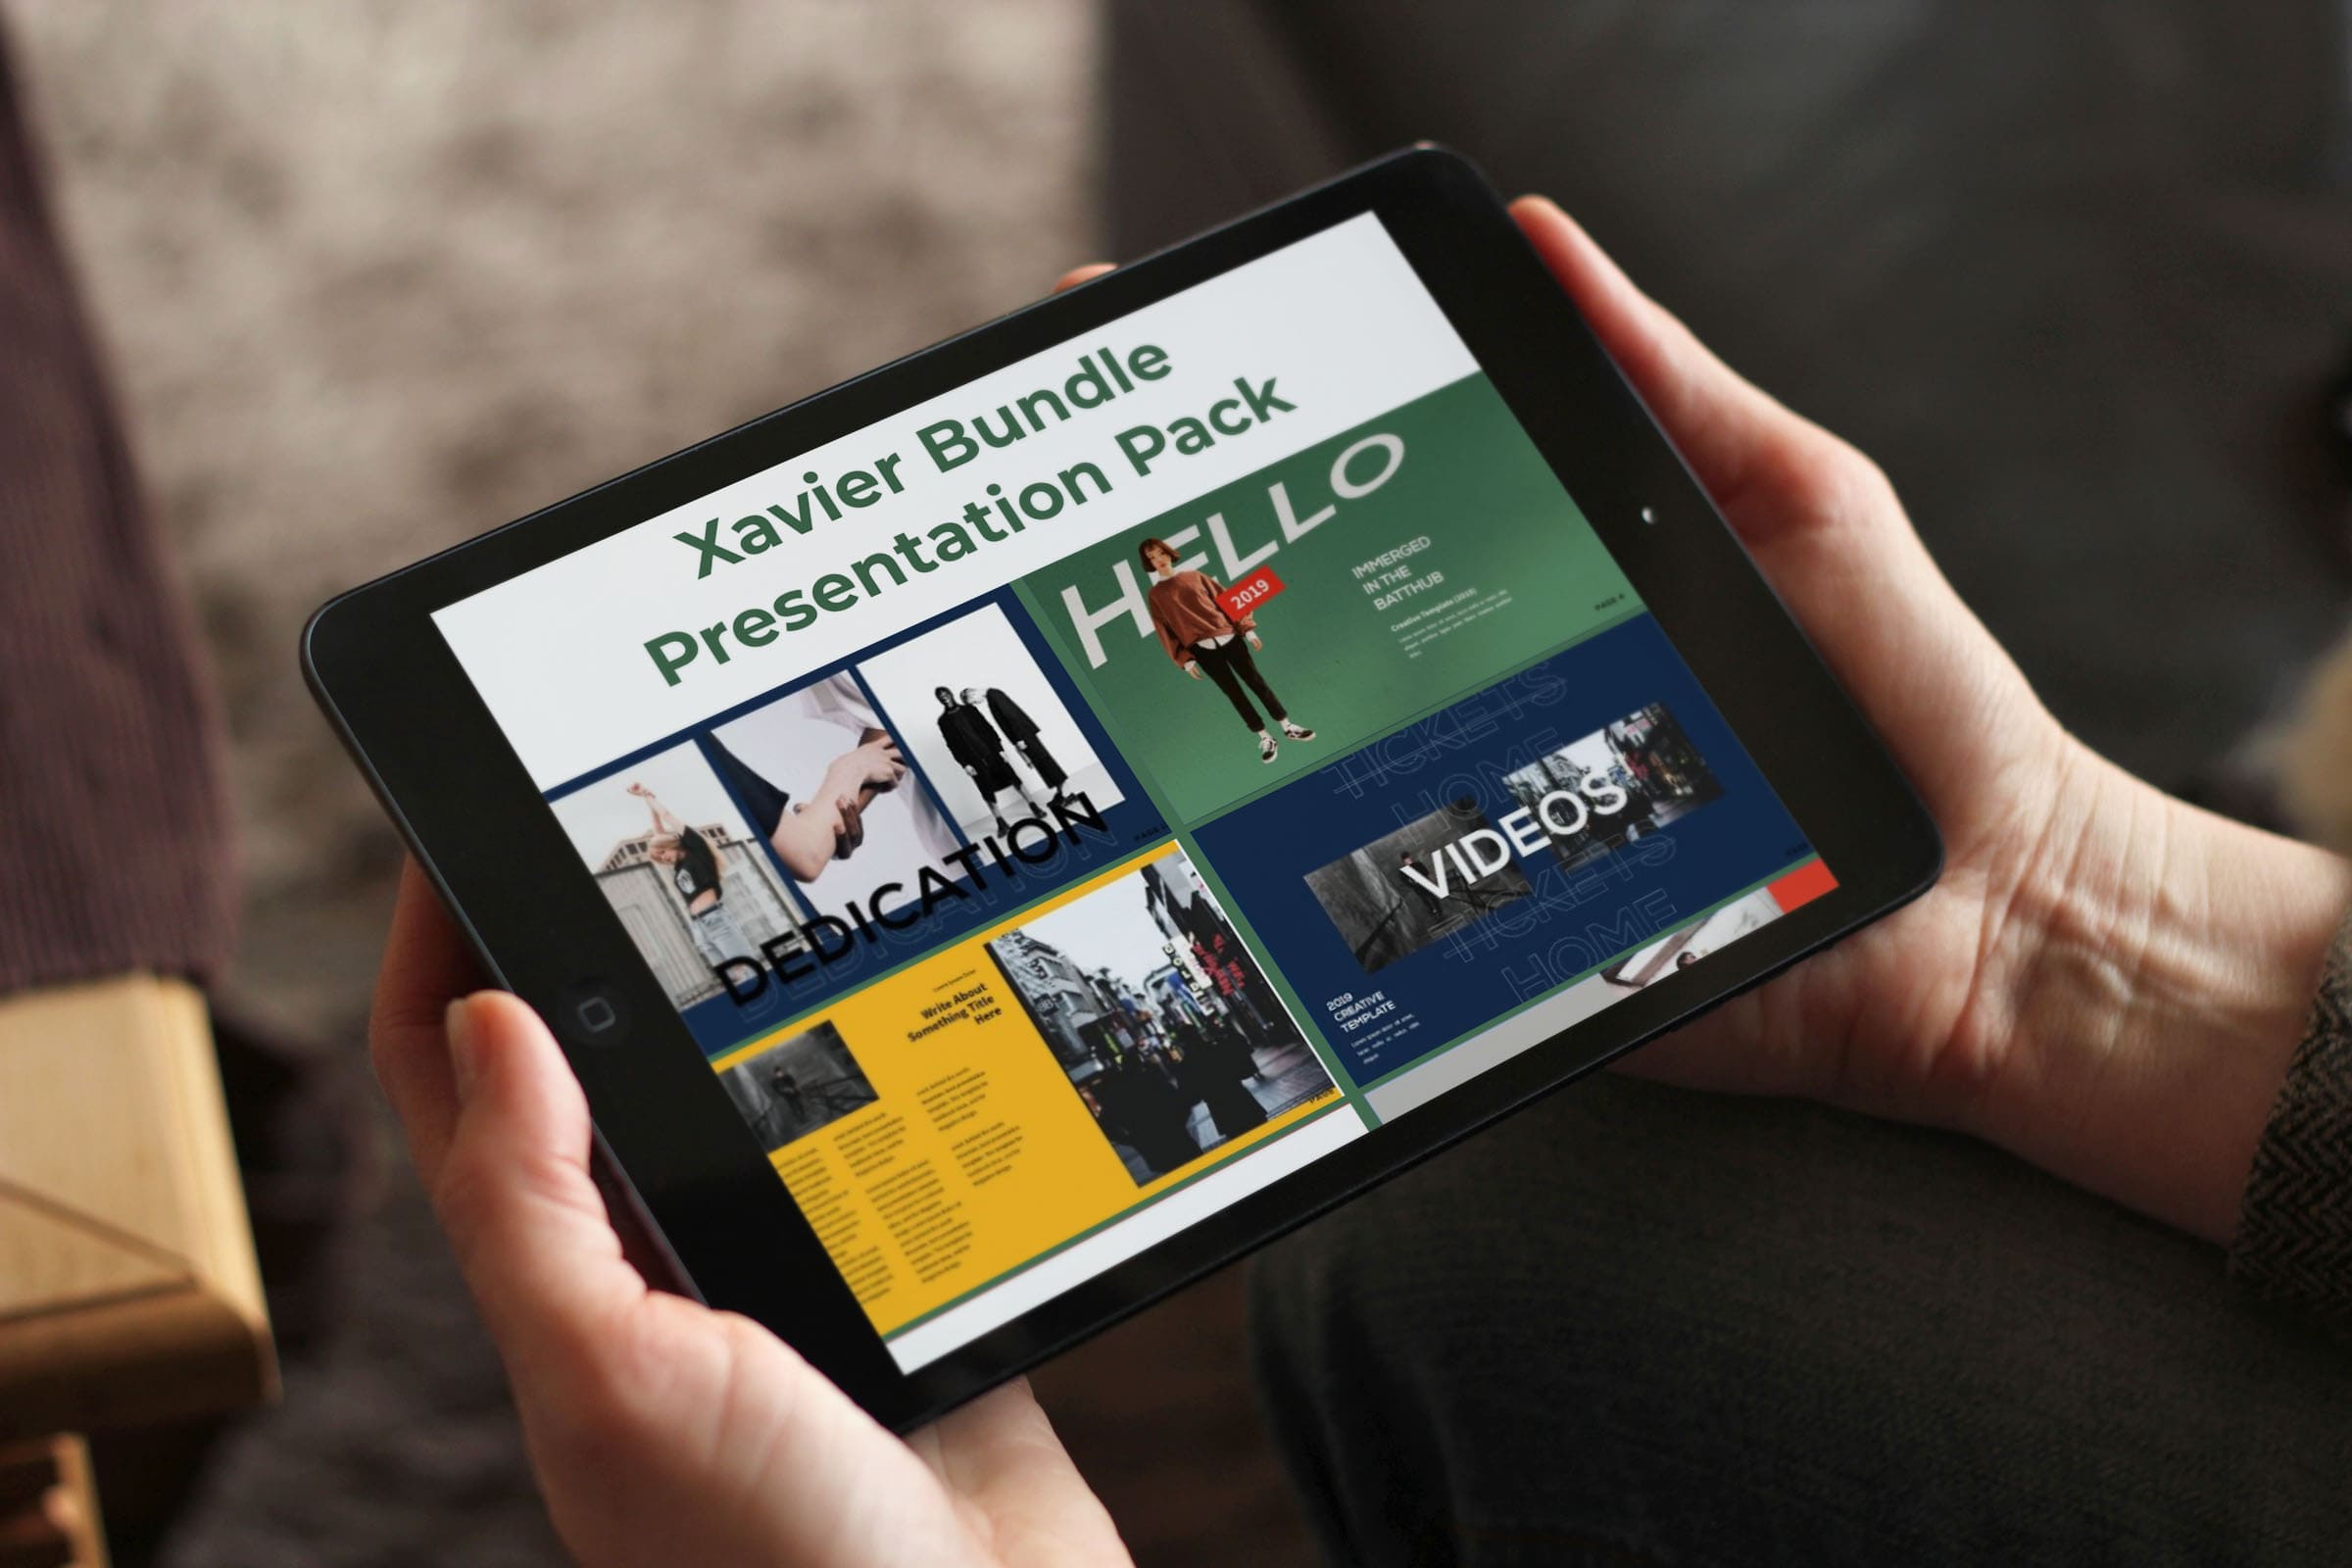 Tablet option of the Xavier Bundle Presentation Pack.